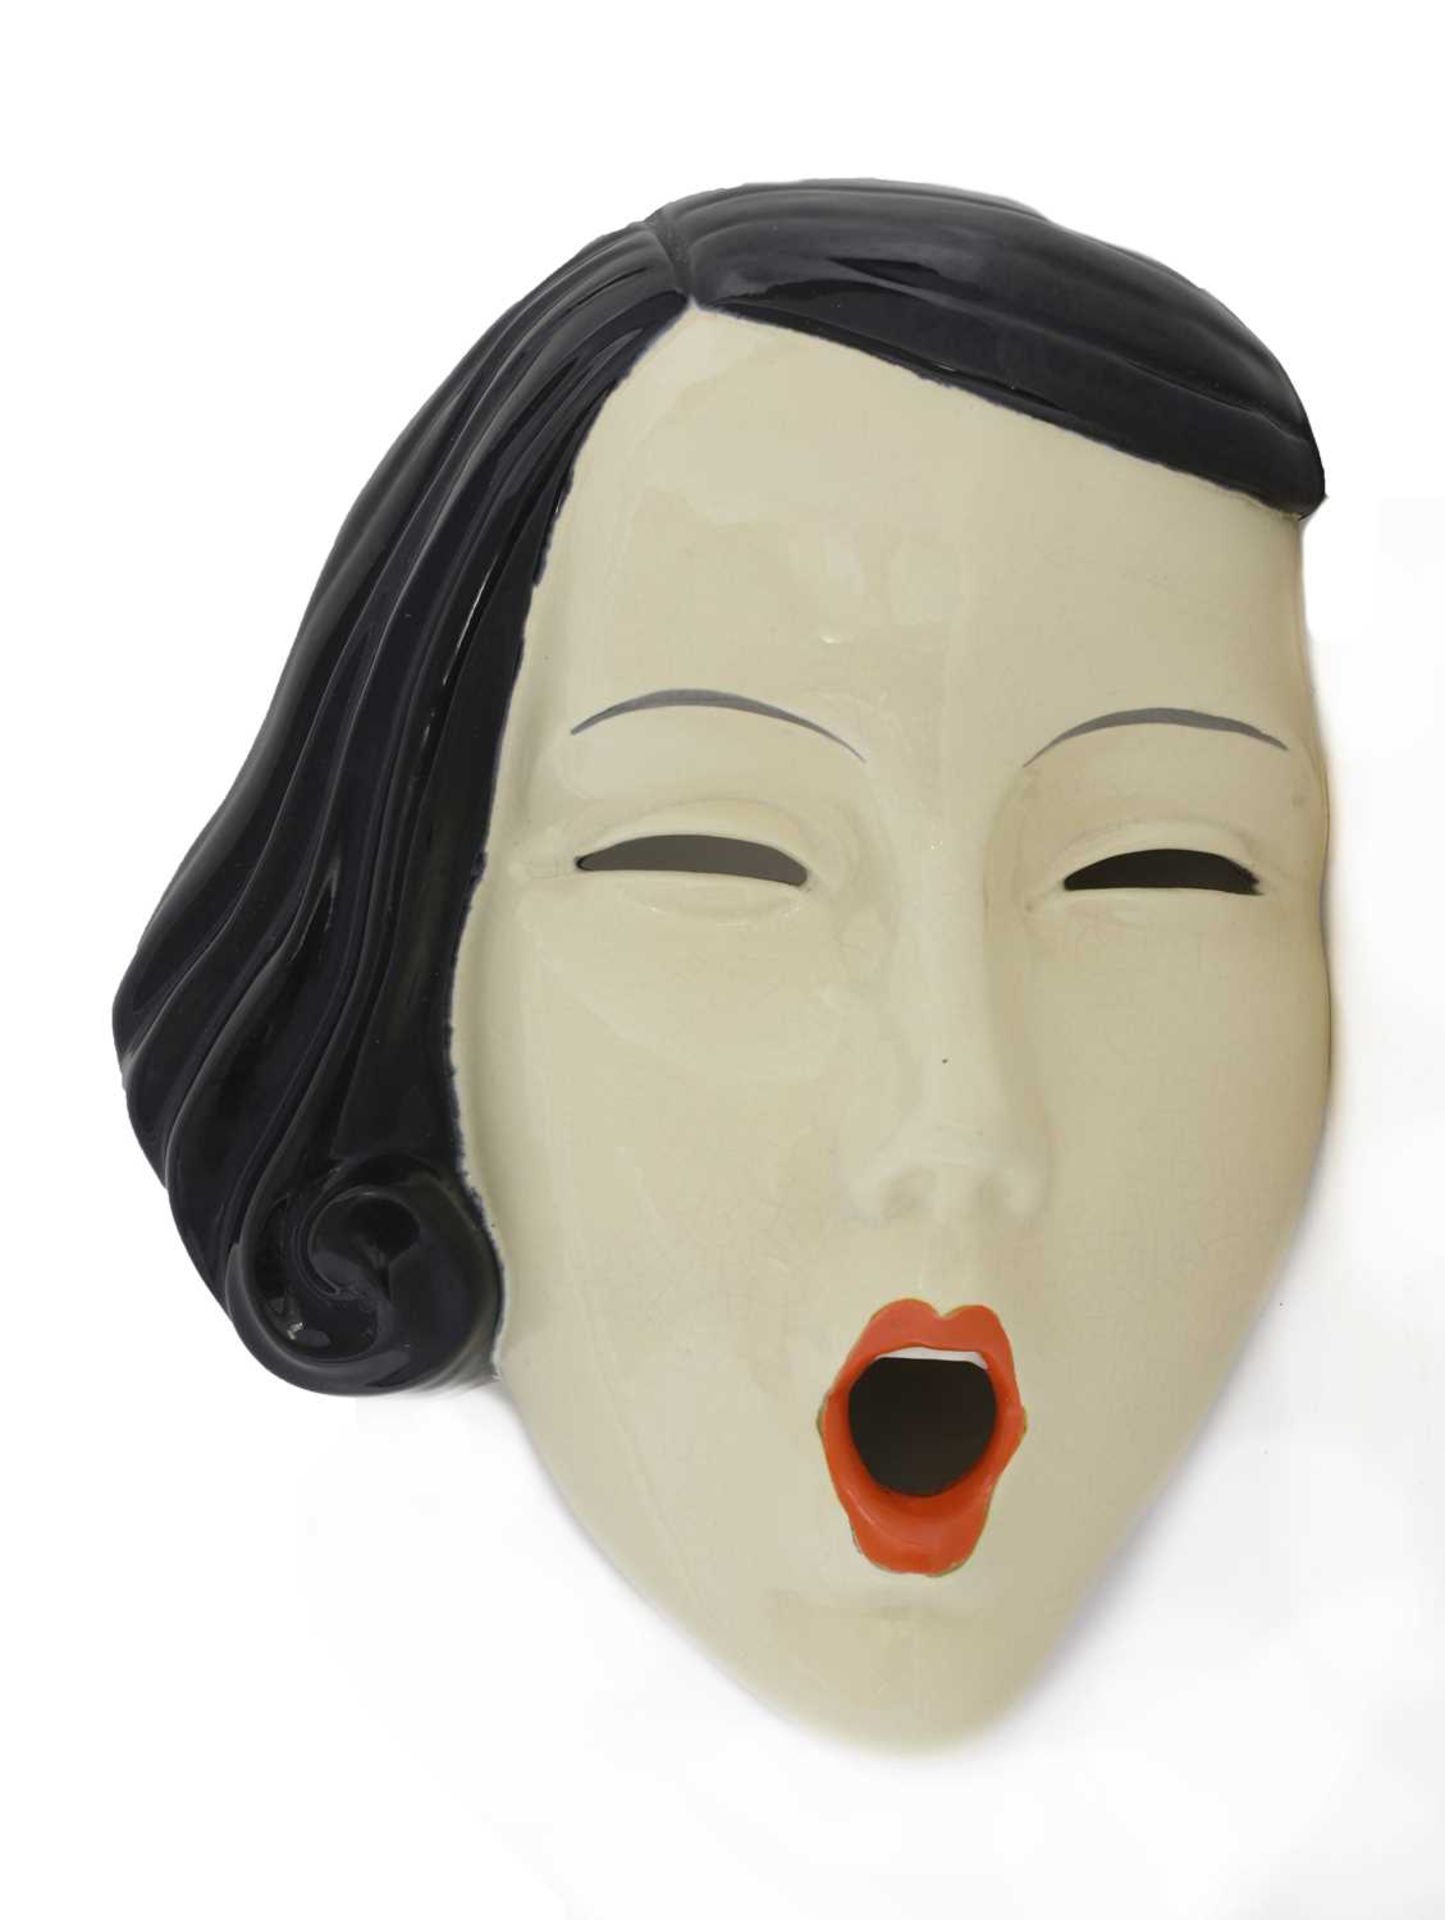 An Art Deco pottery wall mask,